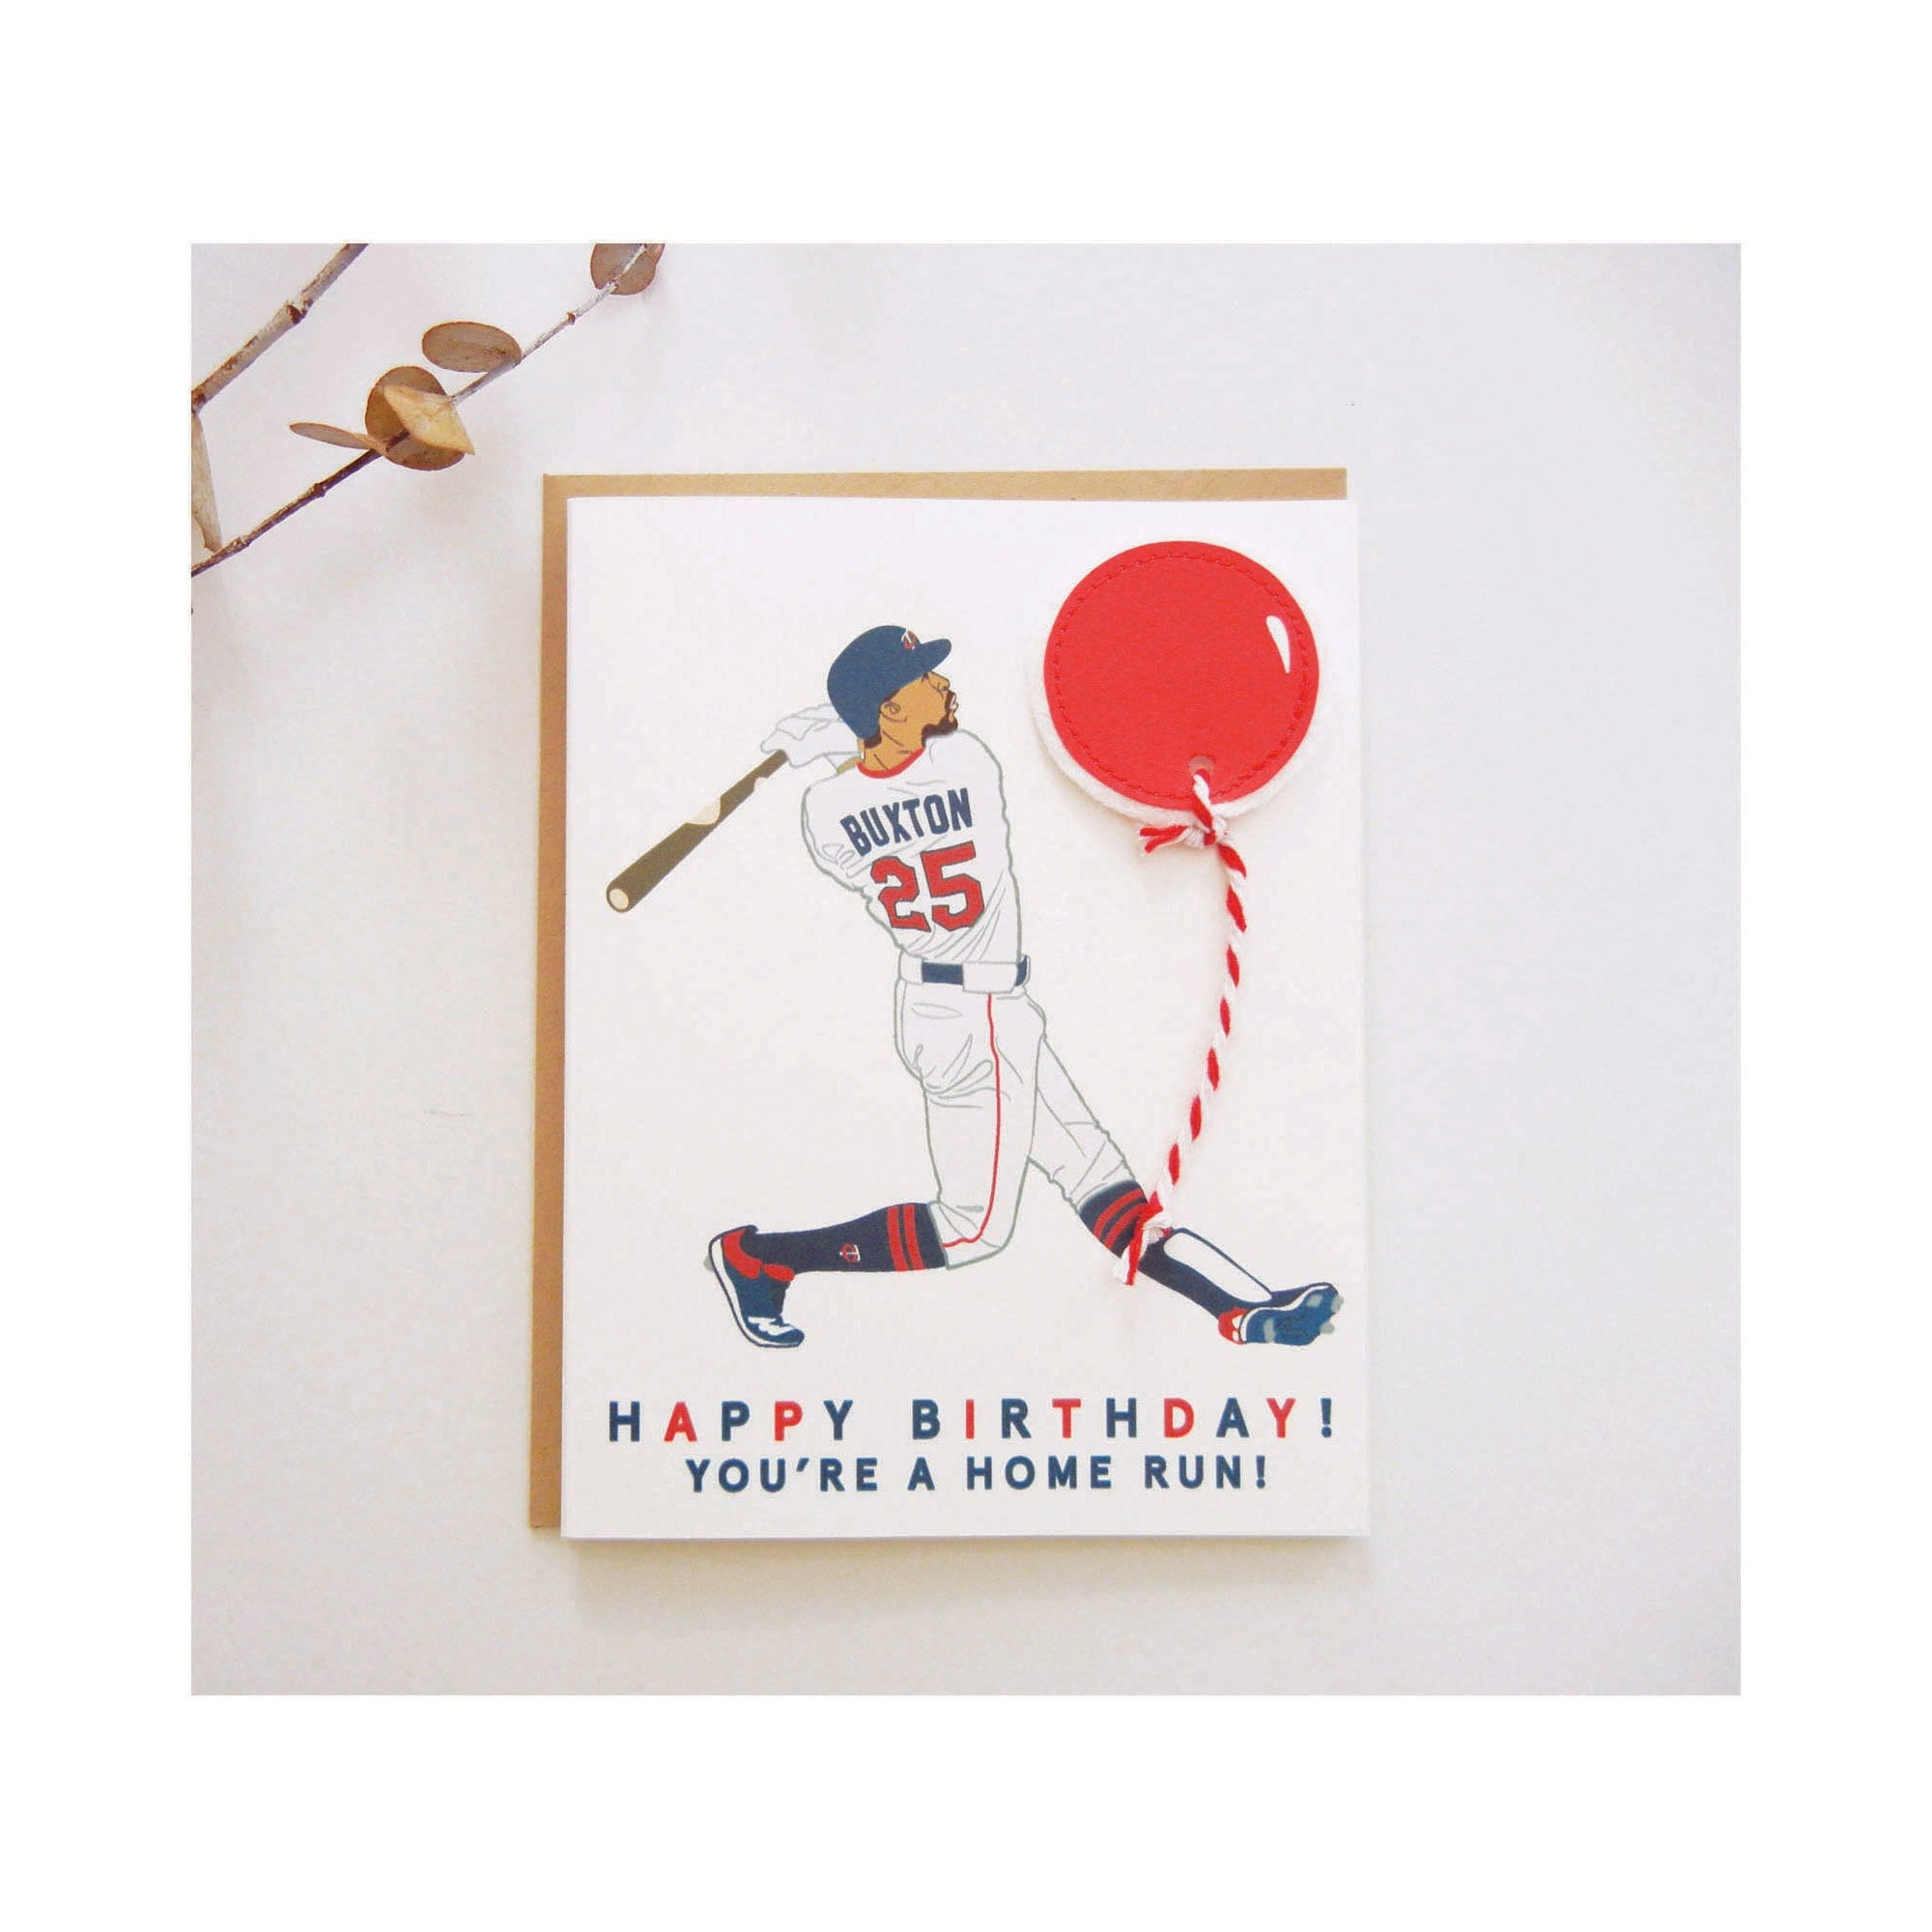 Byron Buxton Baseball Player Illustration Printed Card / Happy 